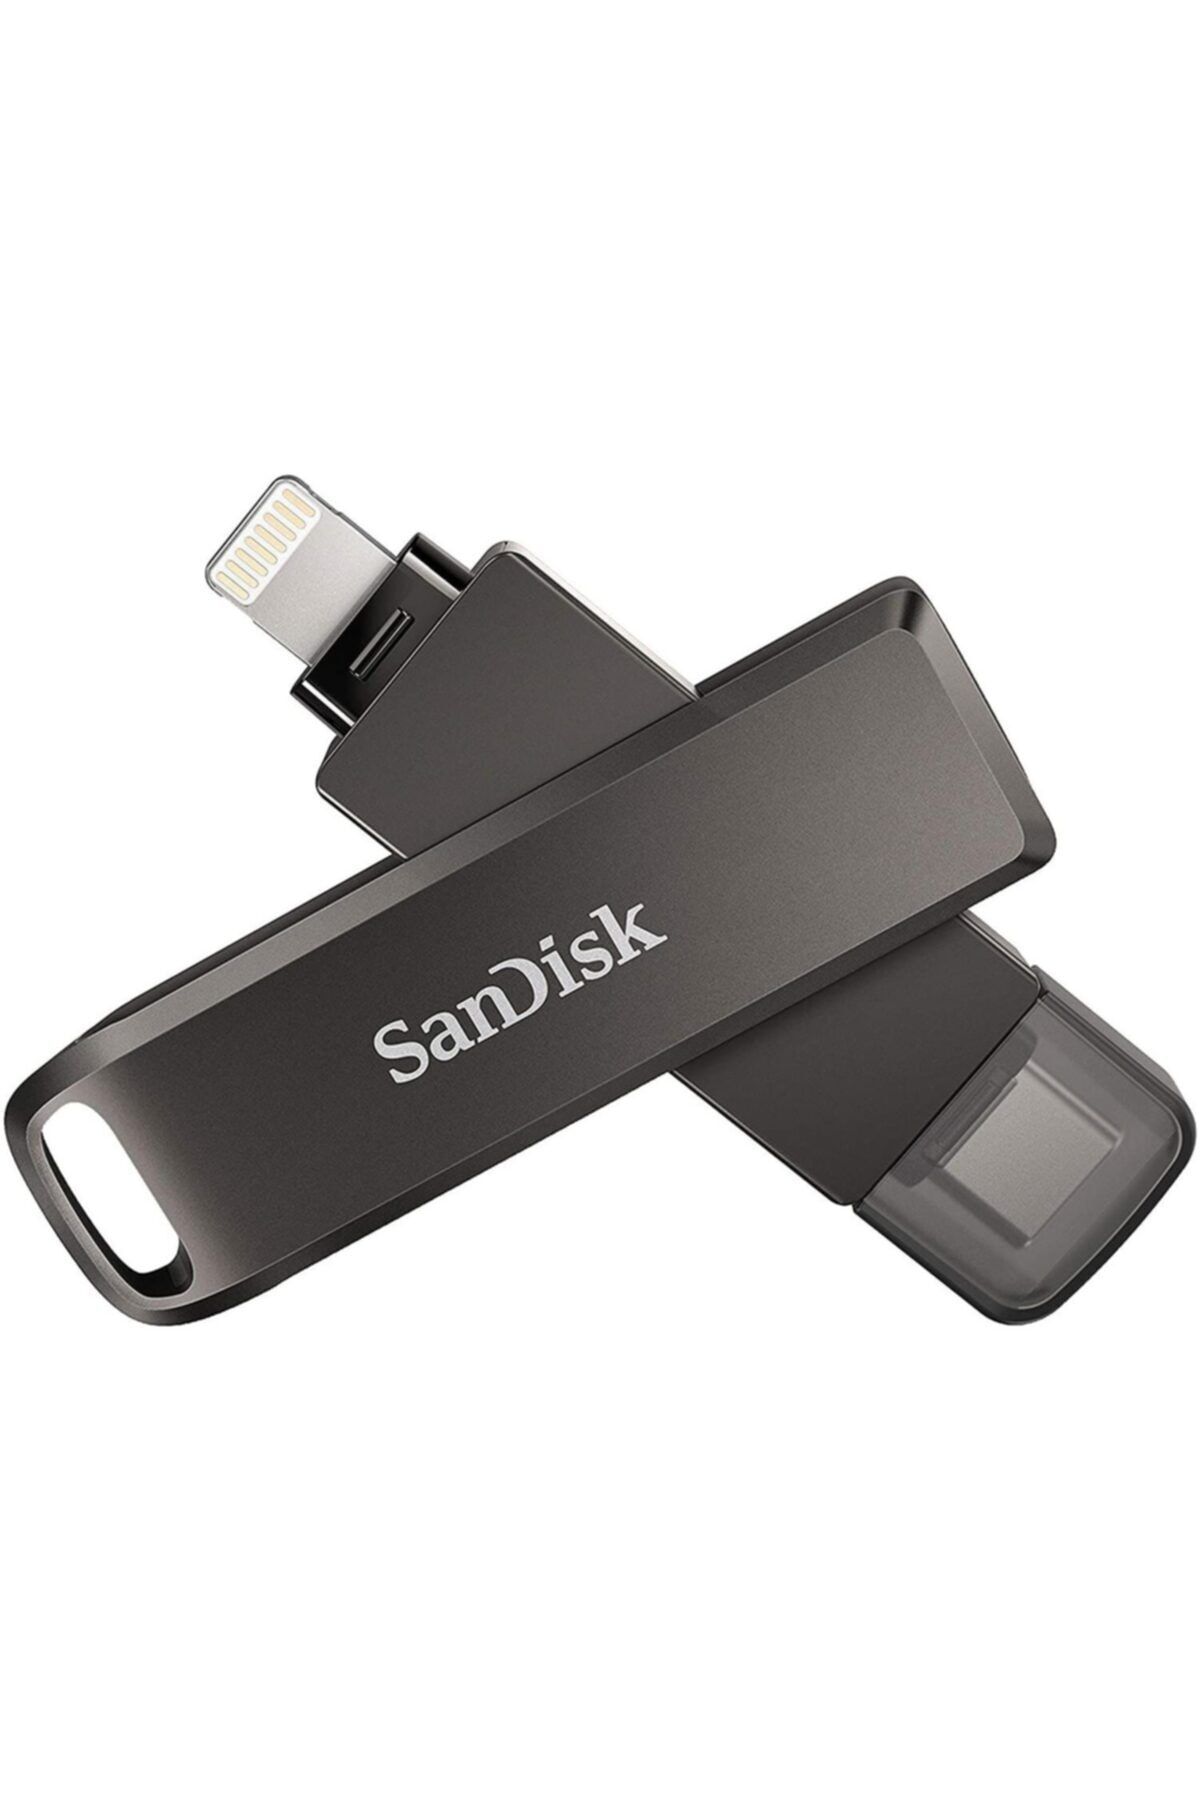 Sandisk Sdıx70n-256g-gn6ne Usb 256gb Ios Ixpand Flash Drıve Luxe